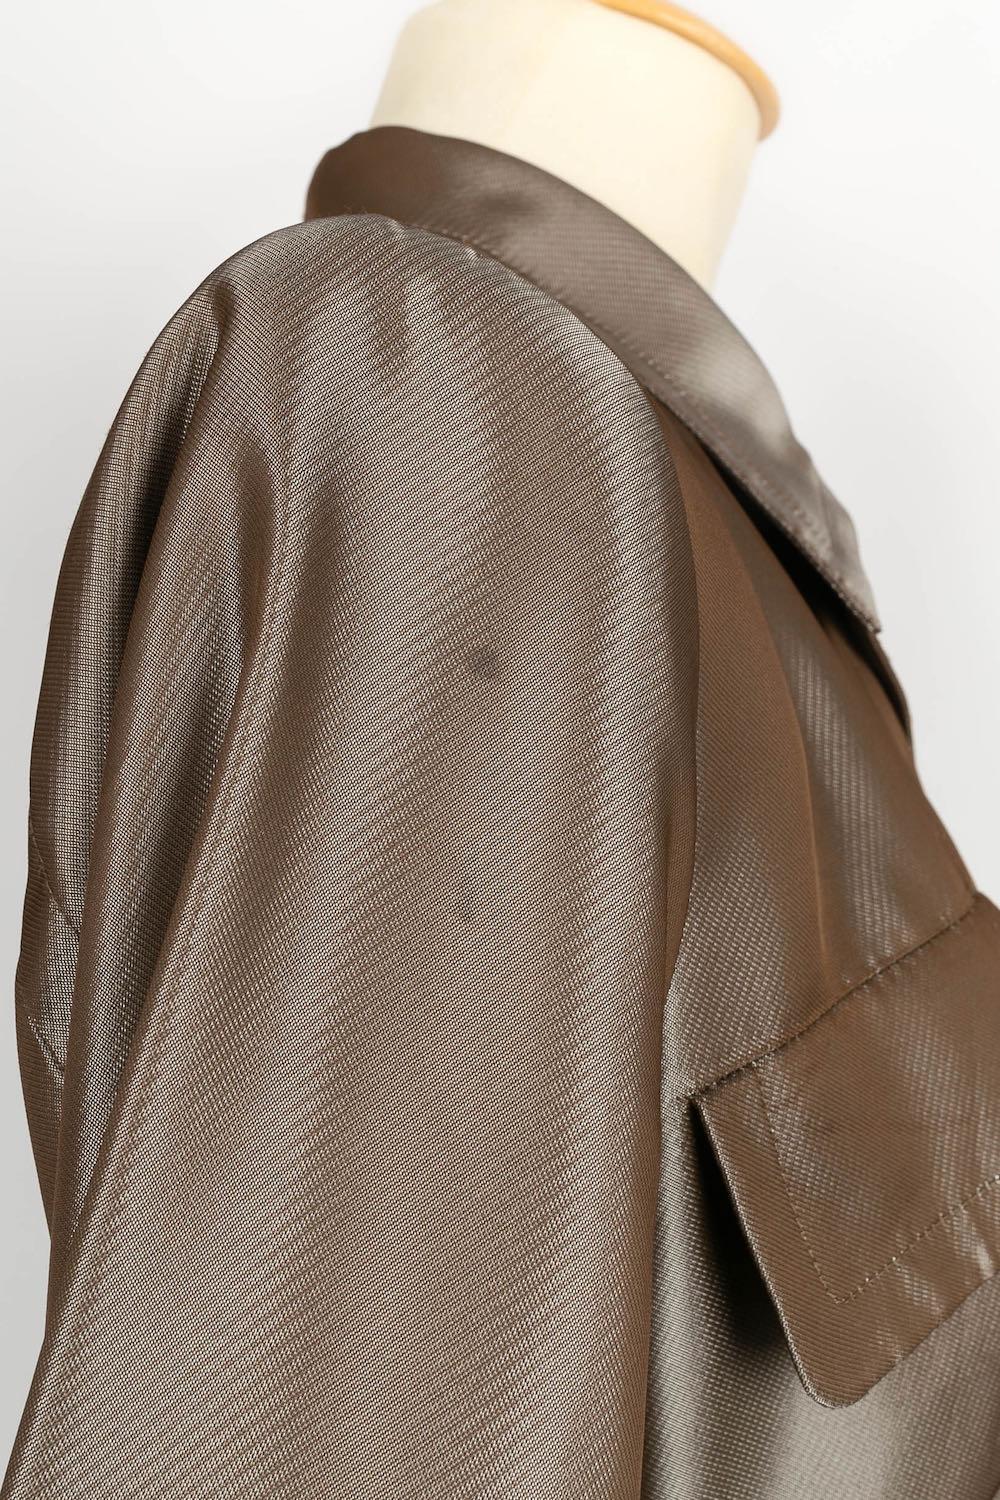 Yves Saint Laurent Copper Trench Coat Size 36FR For Sale 1